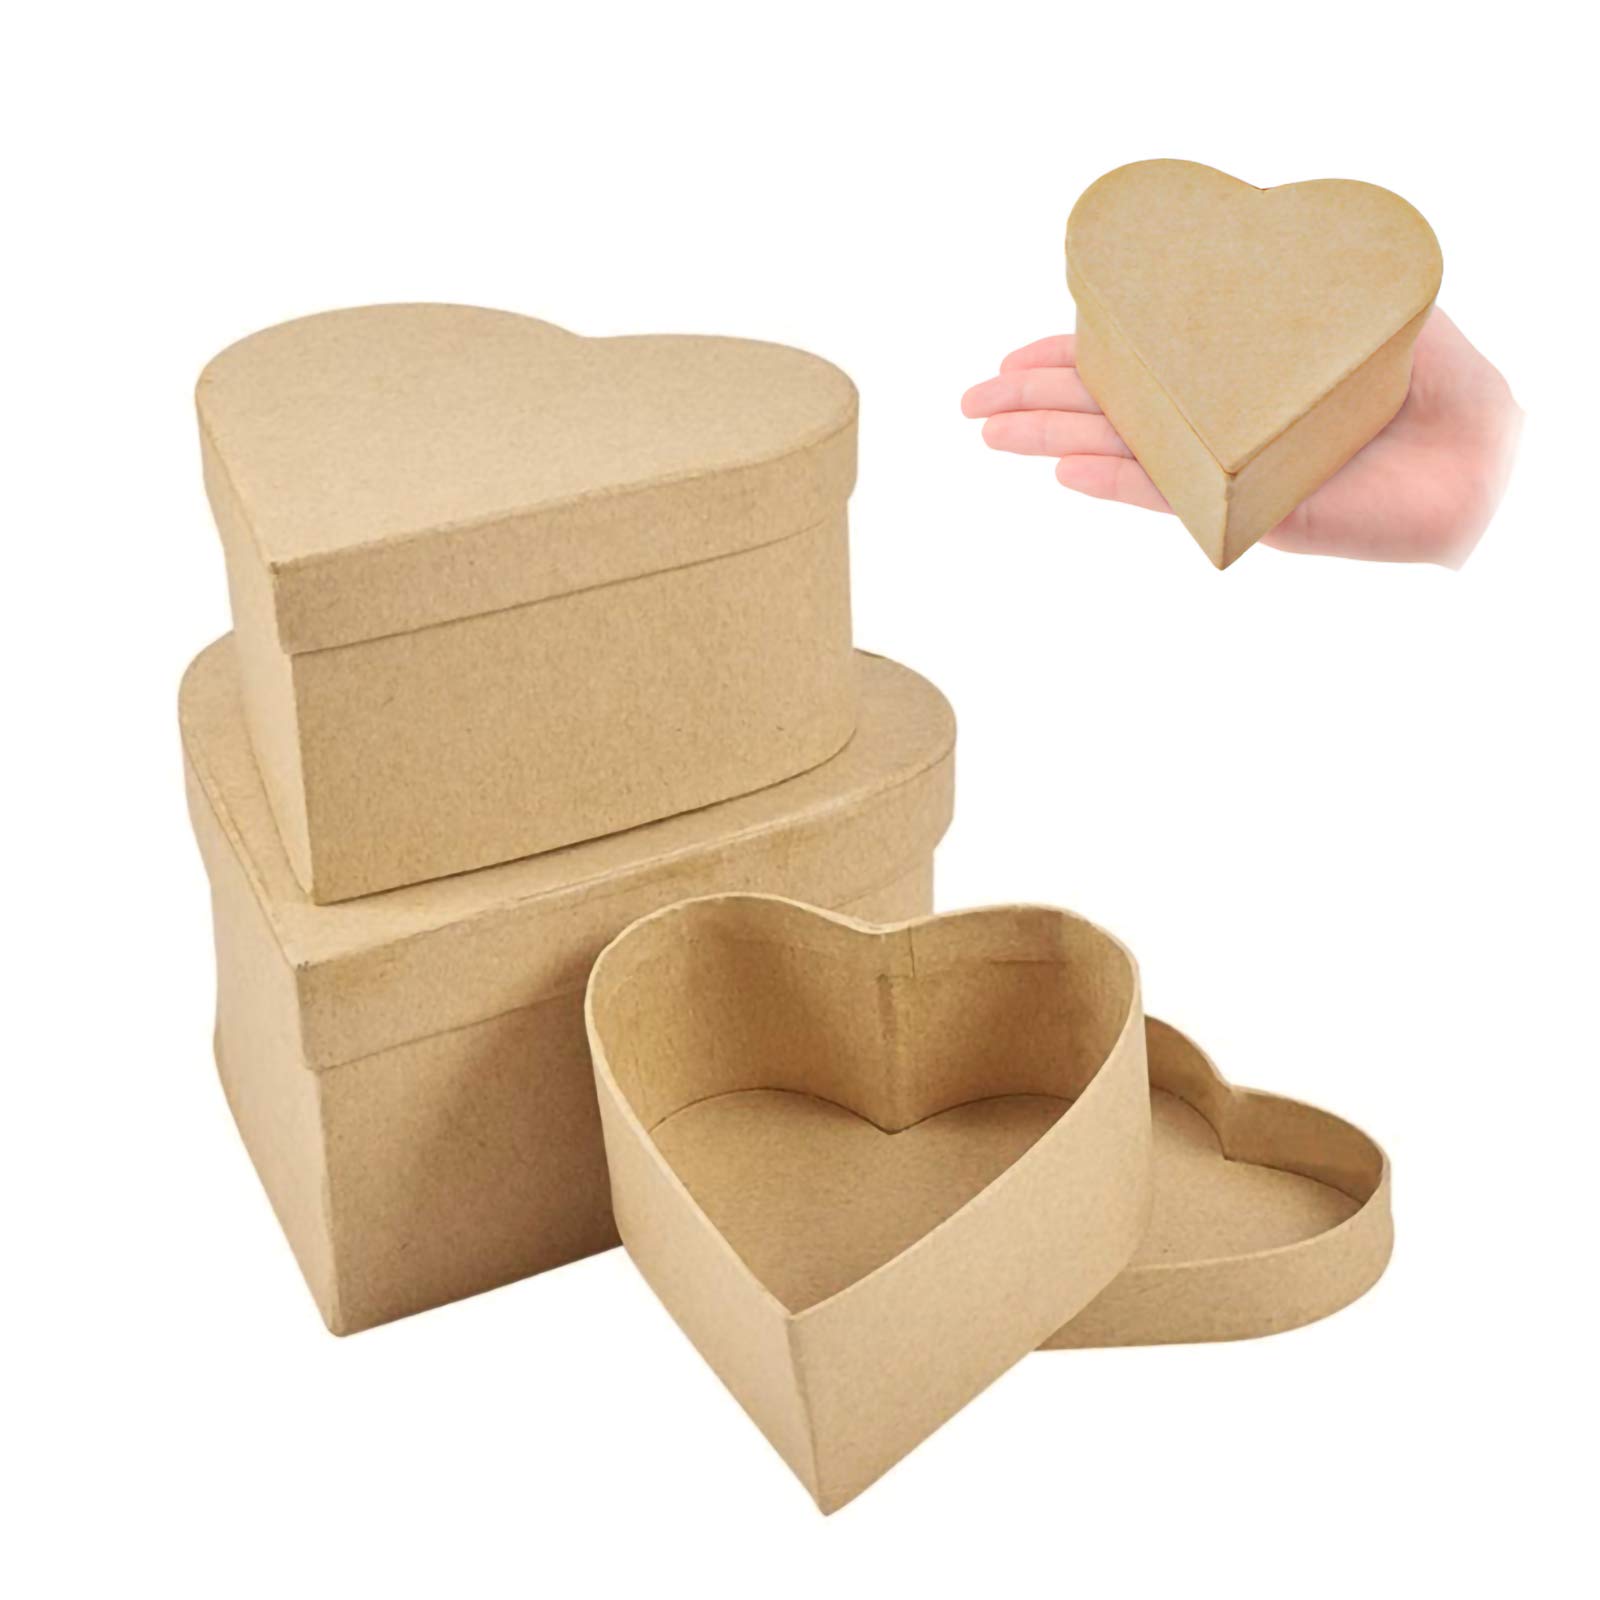 WANDIC Mini Paper Mache Boxes 3Pcs Small Palm-Sized Heart-Shaped Kraft  Paper Mache Box Heart Boxes for Saving Accessories Cosmetics Jewelry Gifts  Home Heart 3 pcs